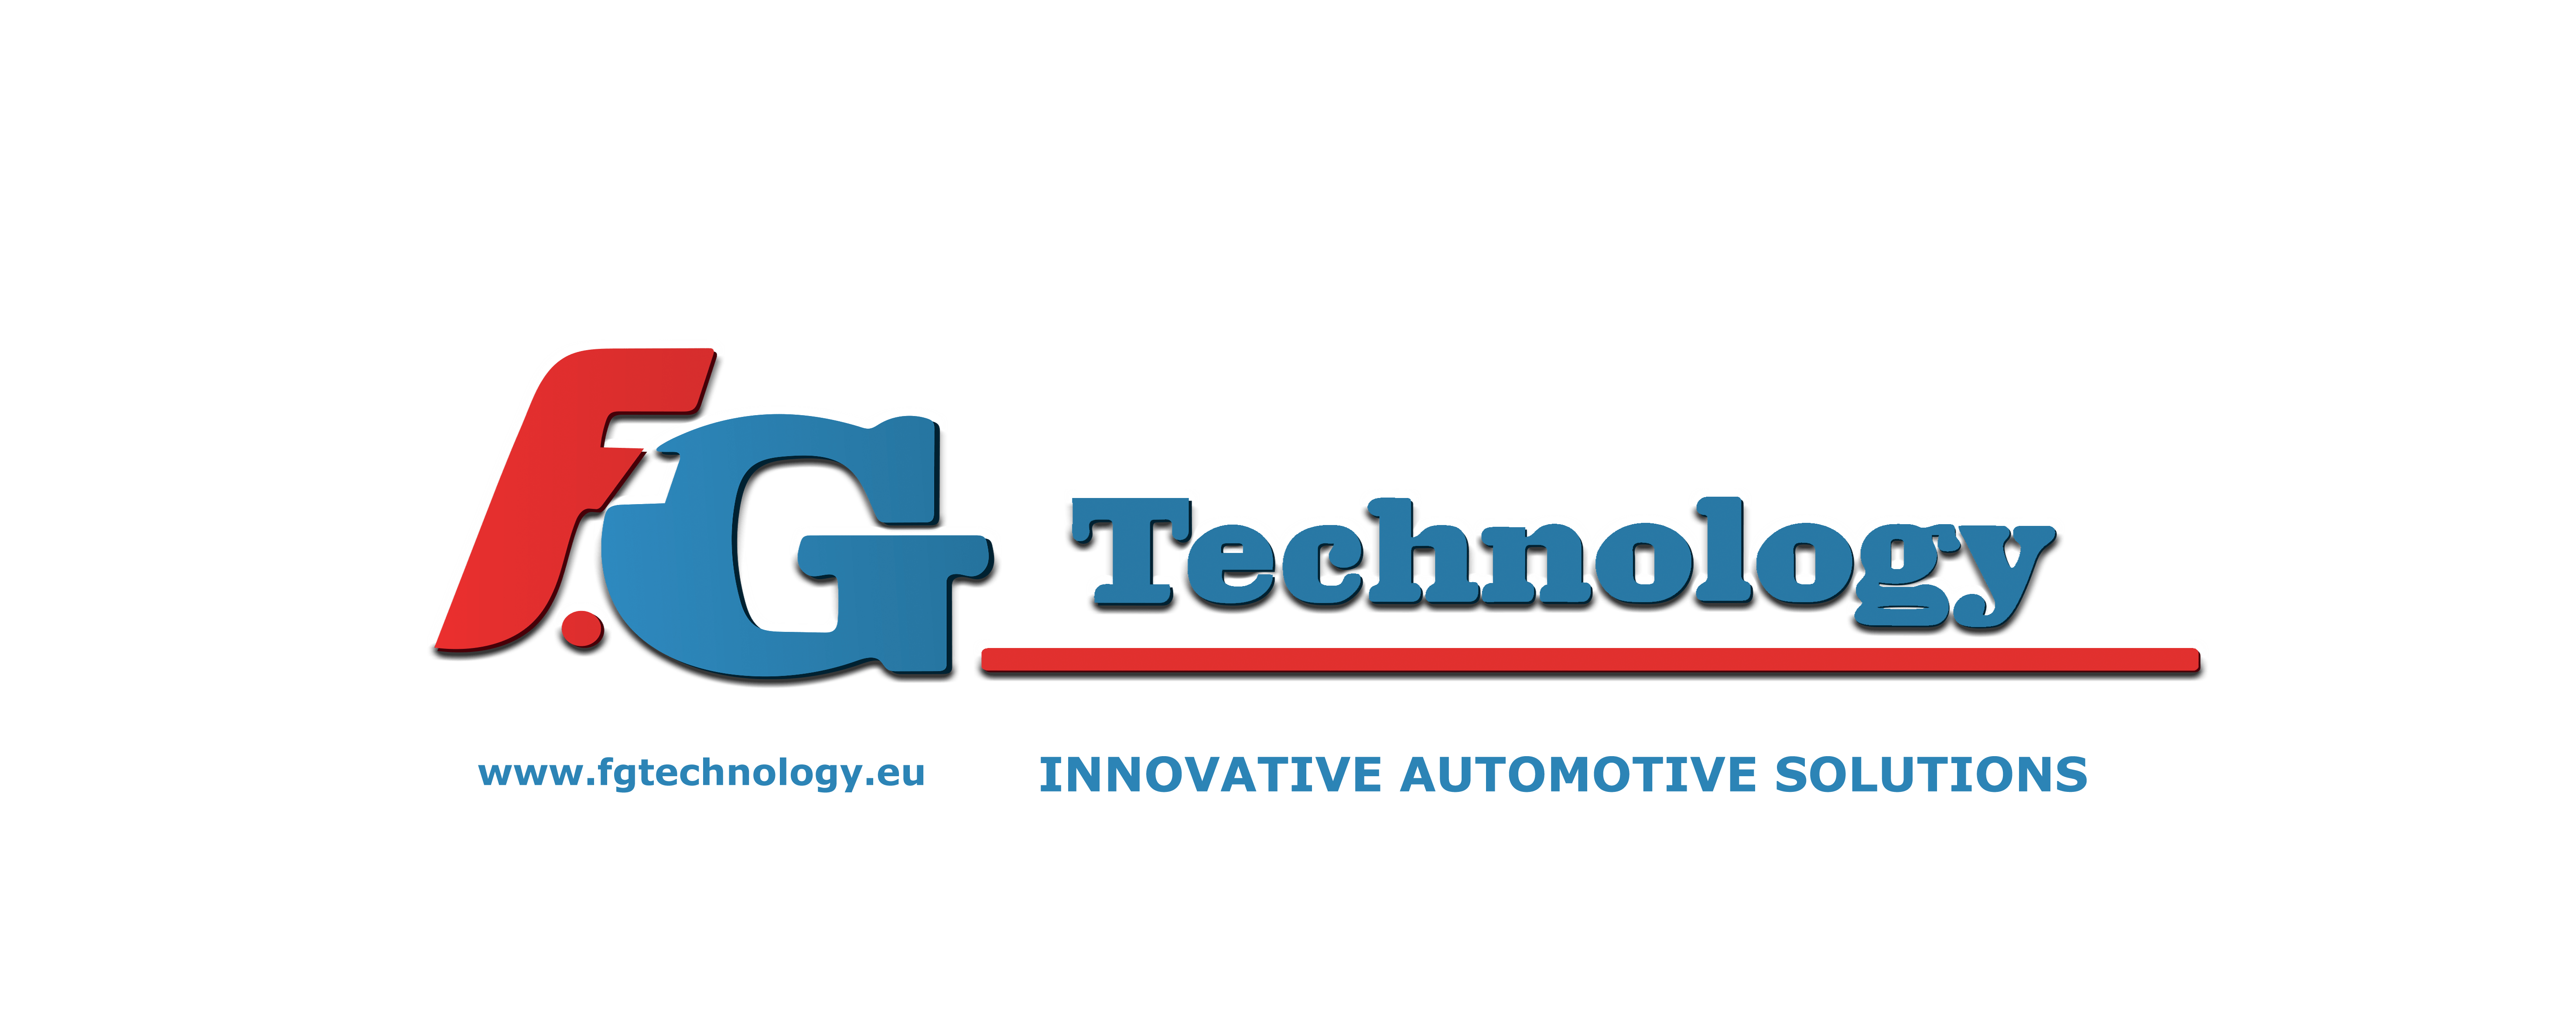 Logo FG Technology